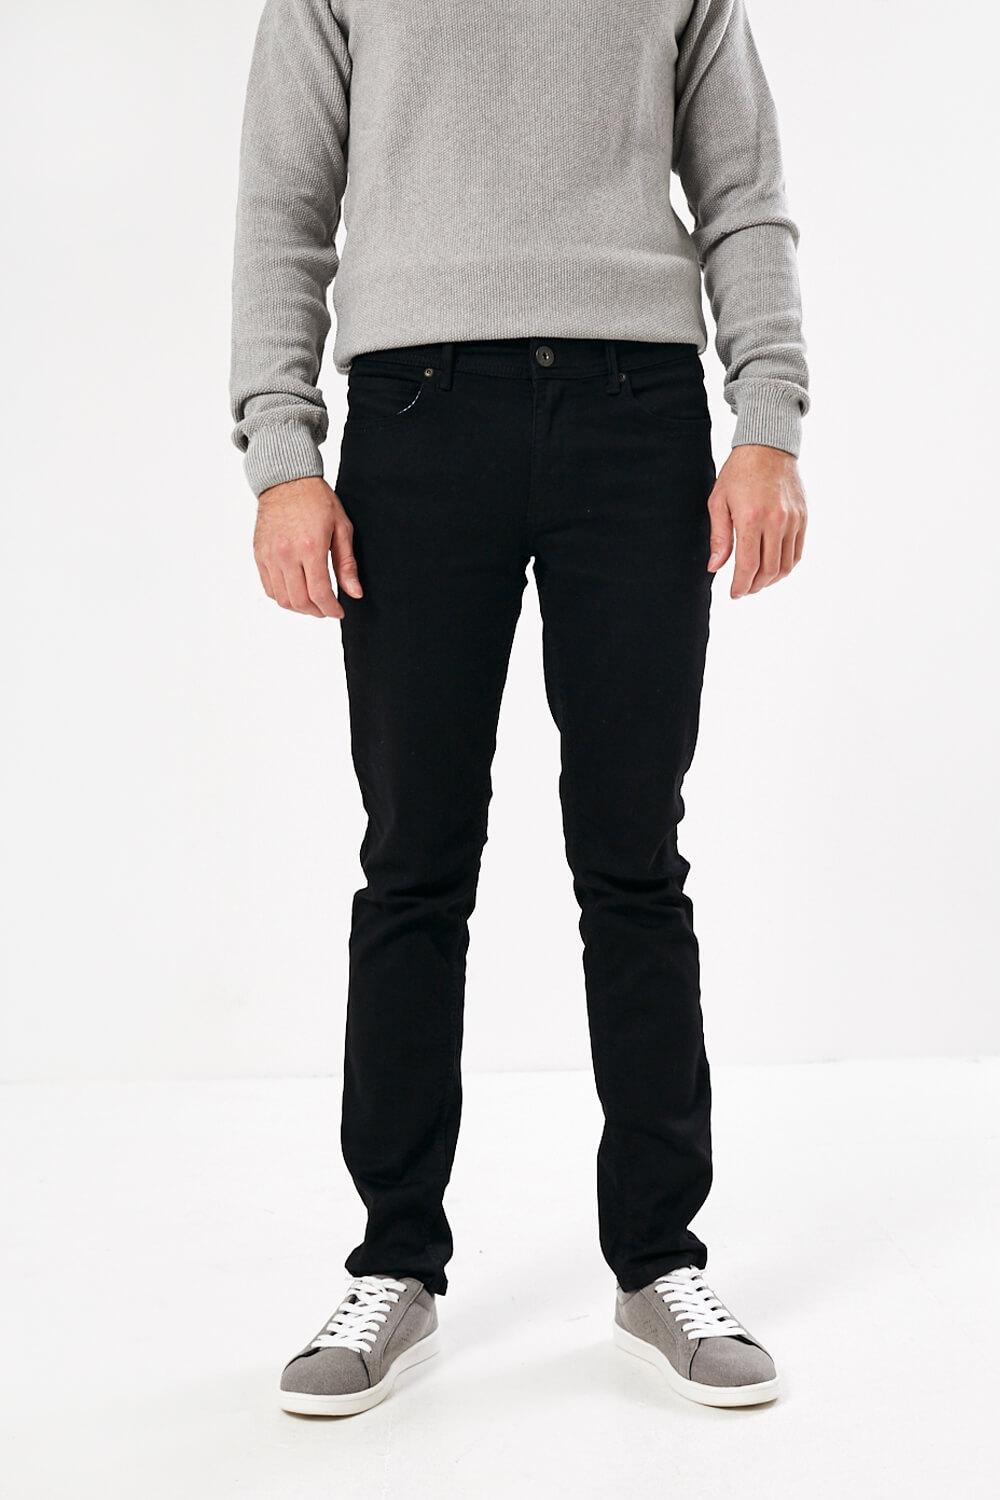 Scott & Wade Miami Denim Jeans in Black | iCLOTHING